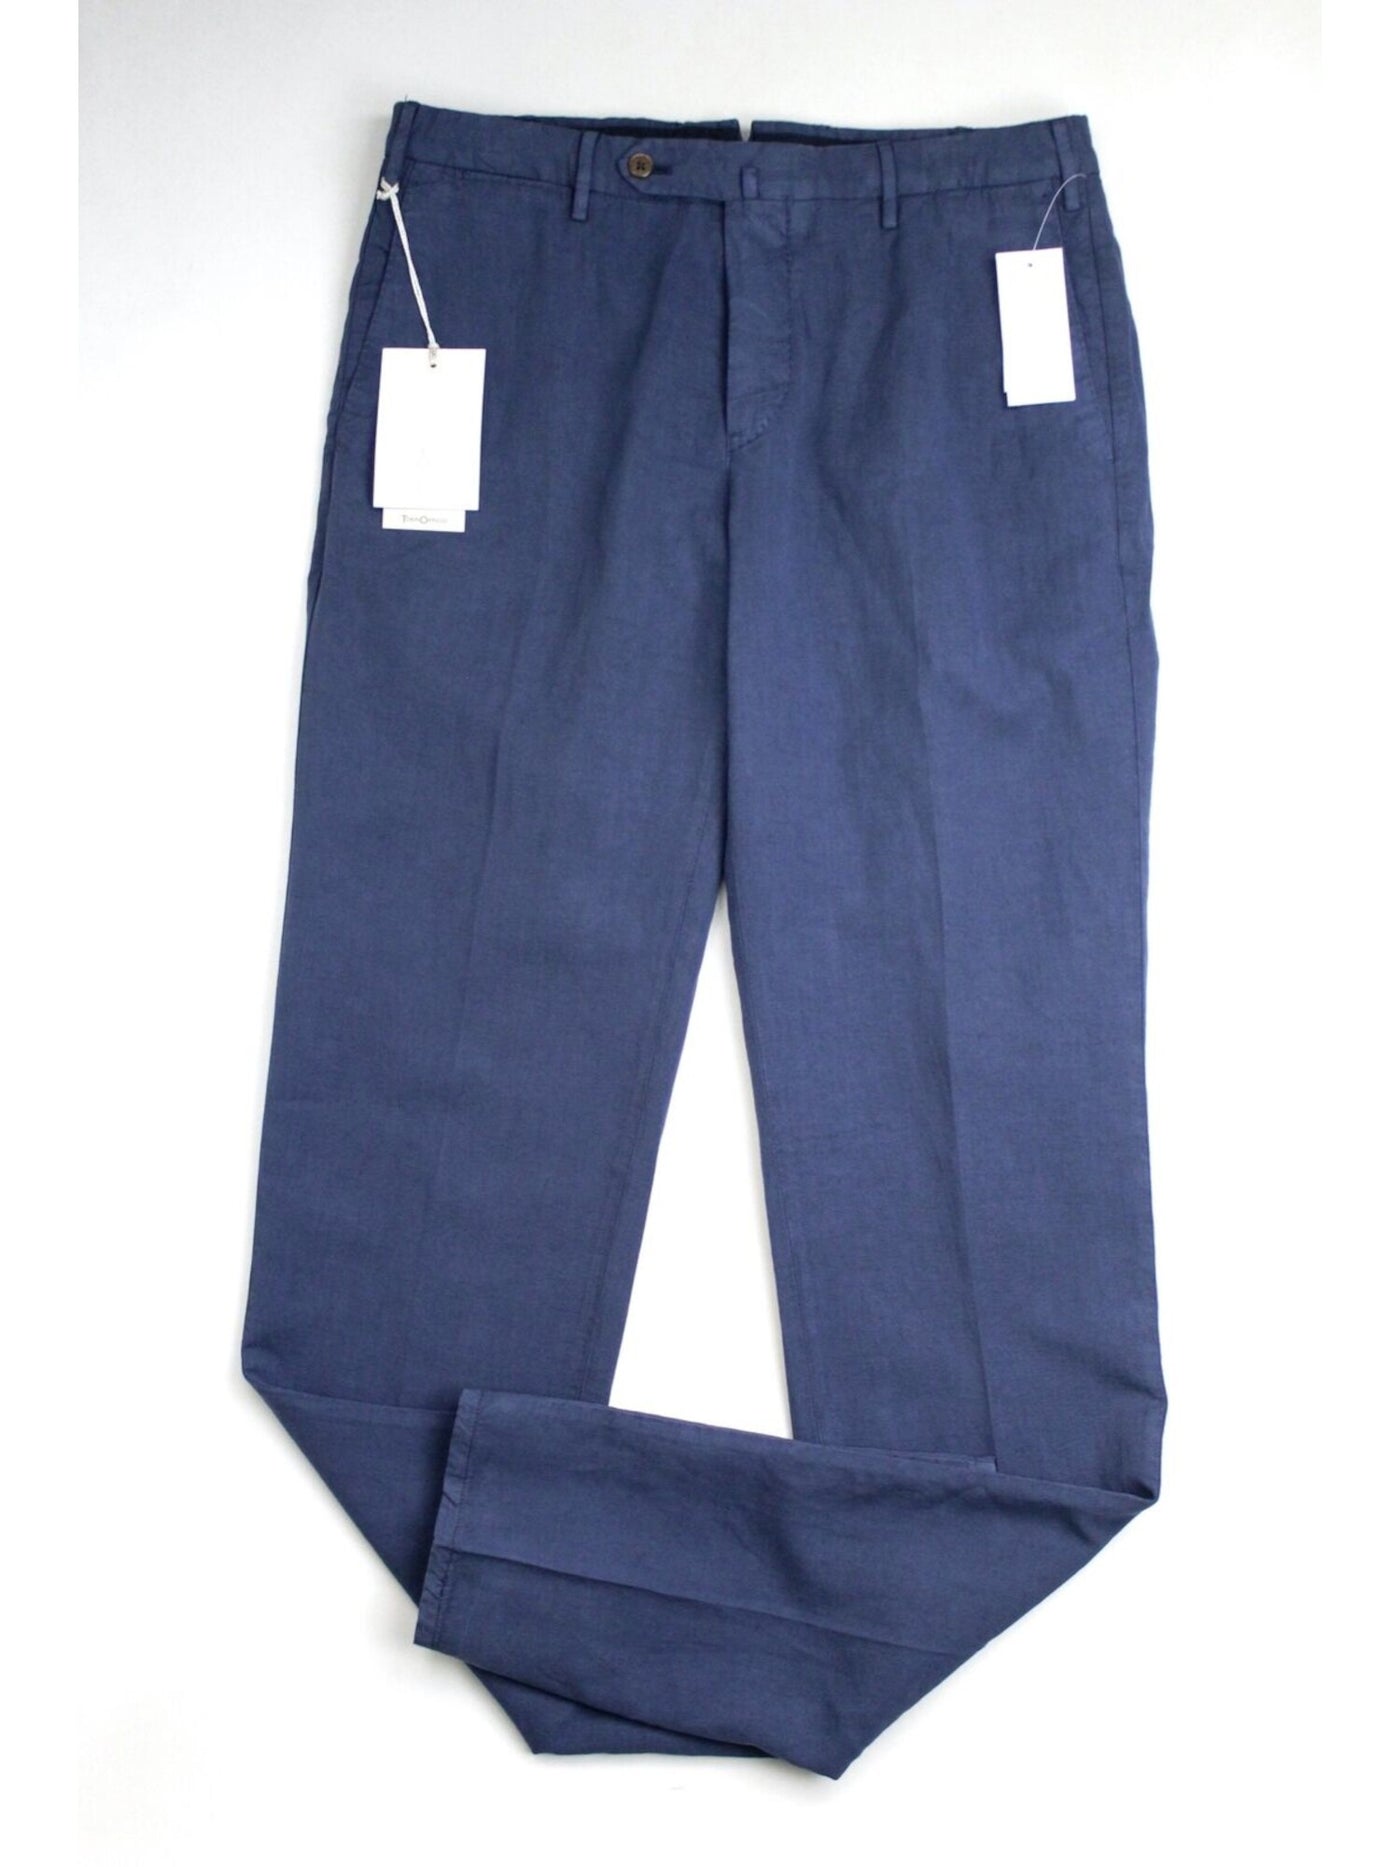 TORIN OPIFICIO Mens Blue Regular Fit Pants 52 38W\36